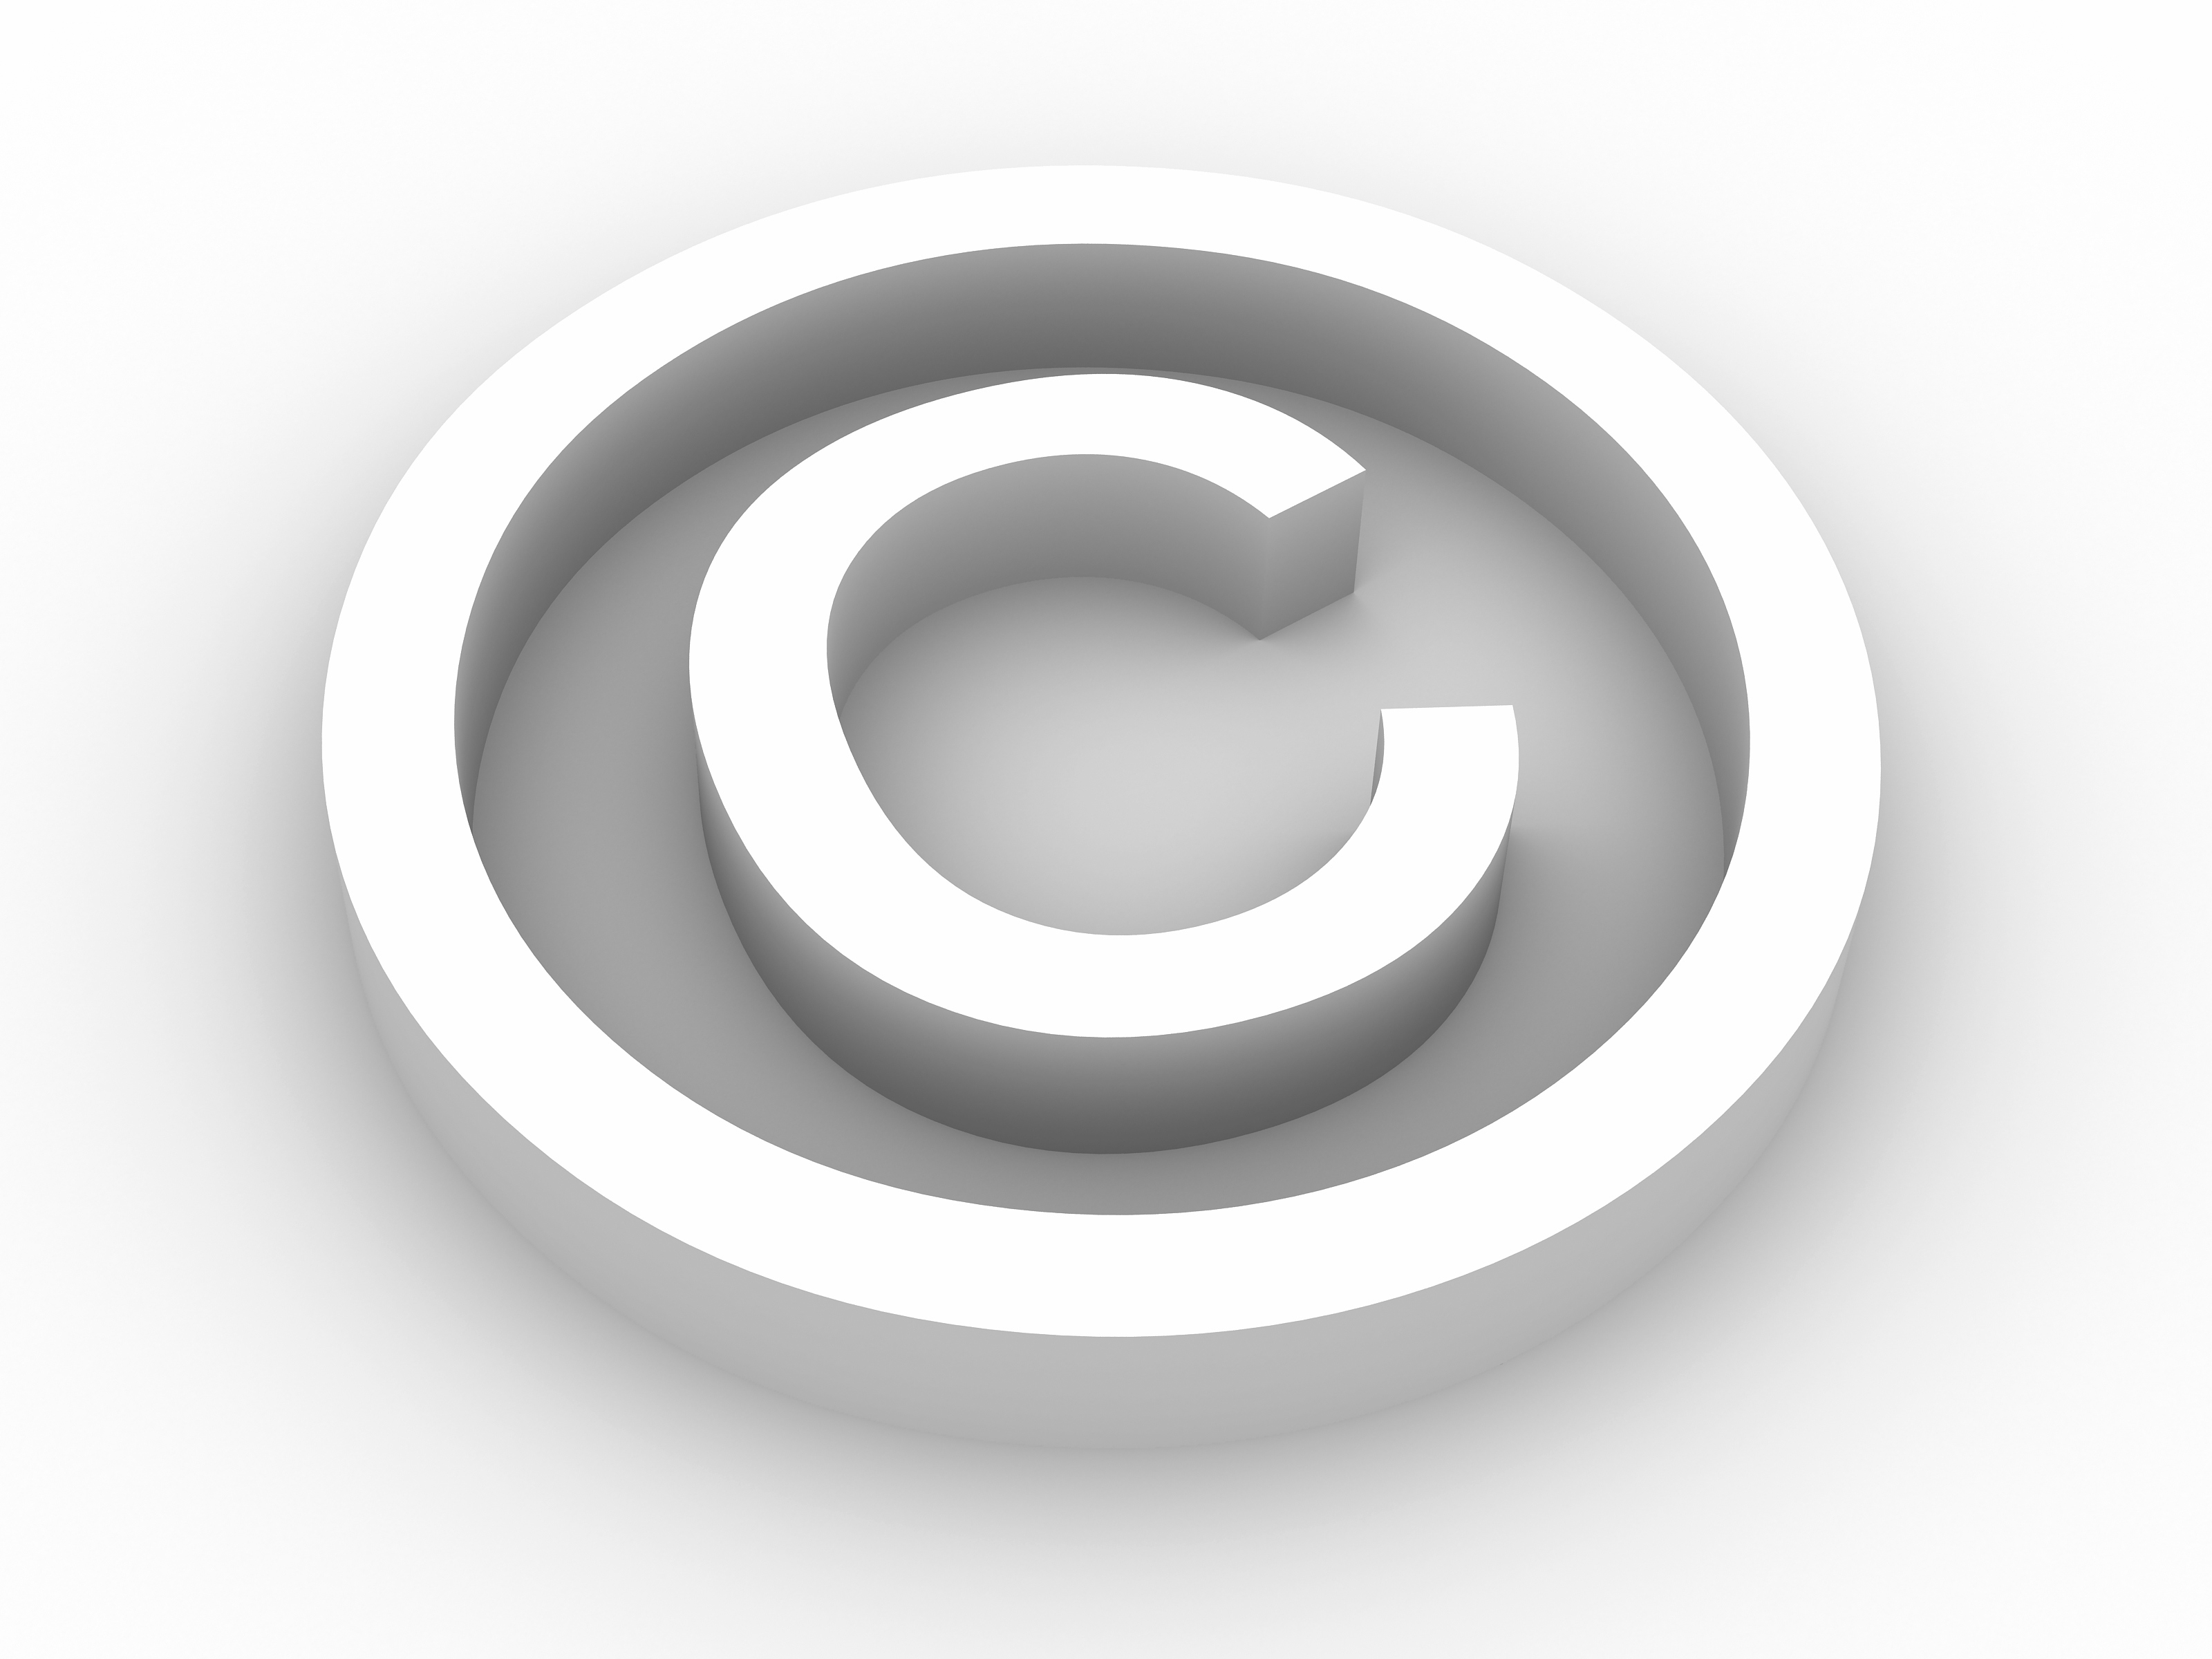 Copyright dissertation